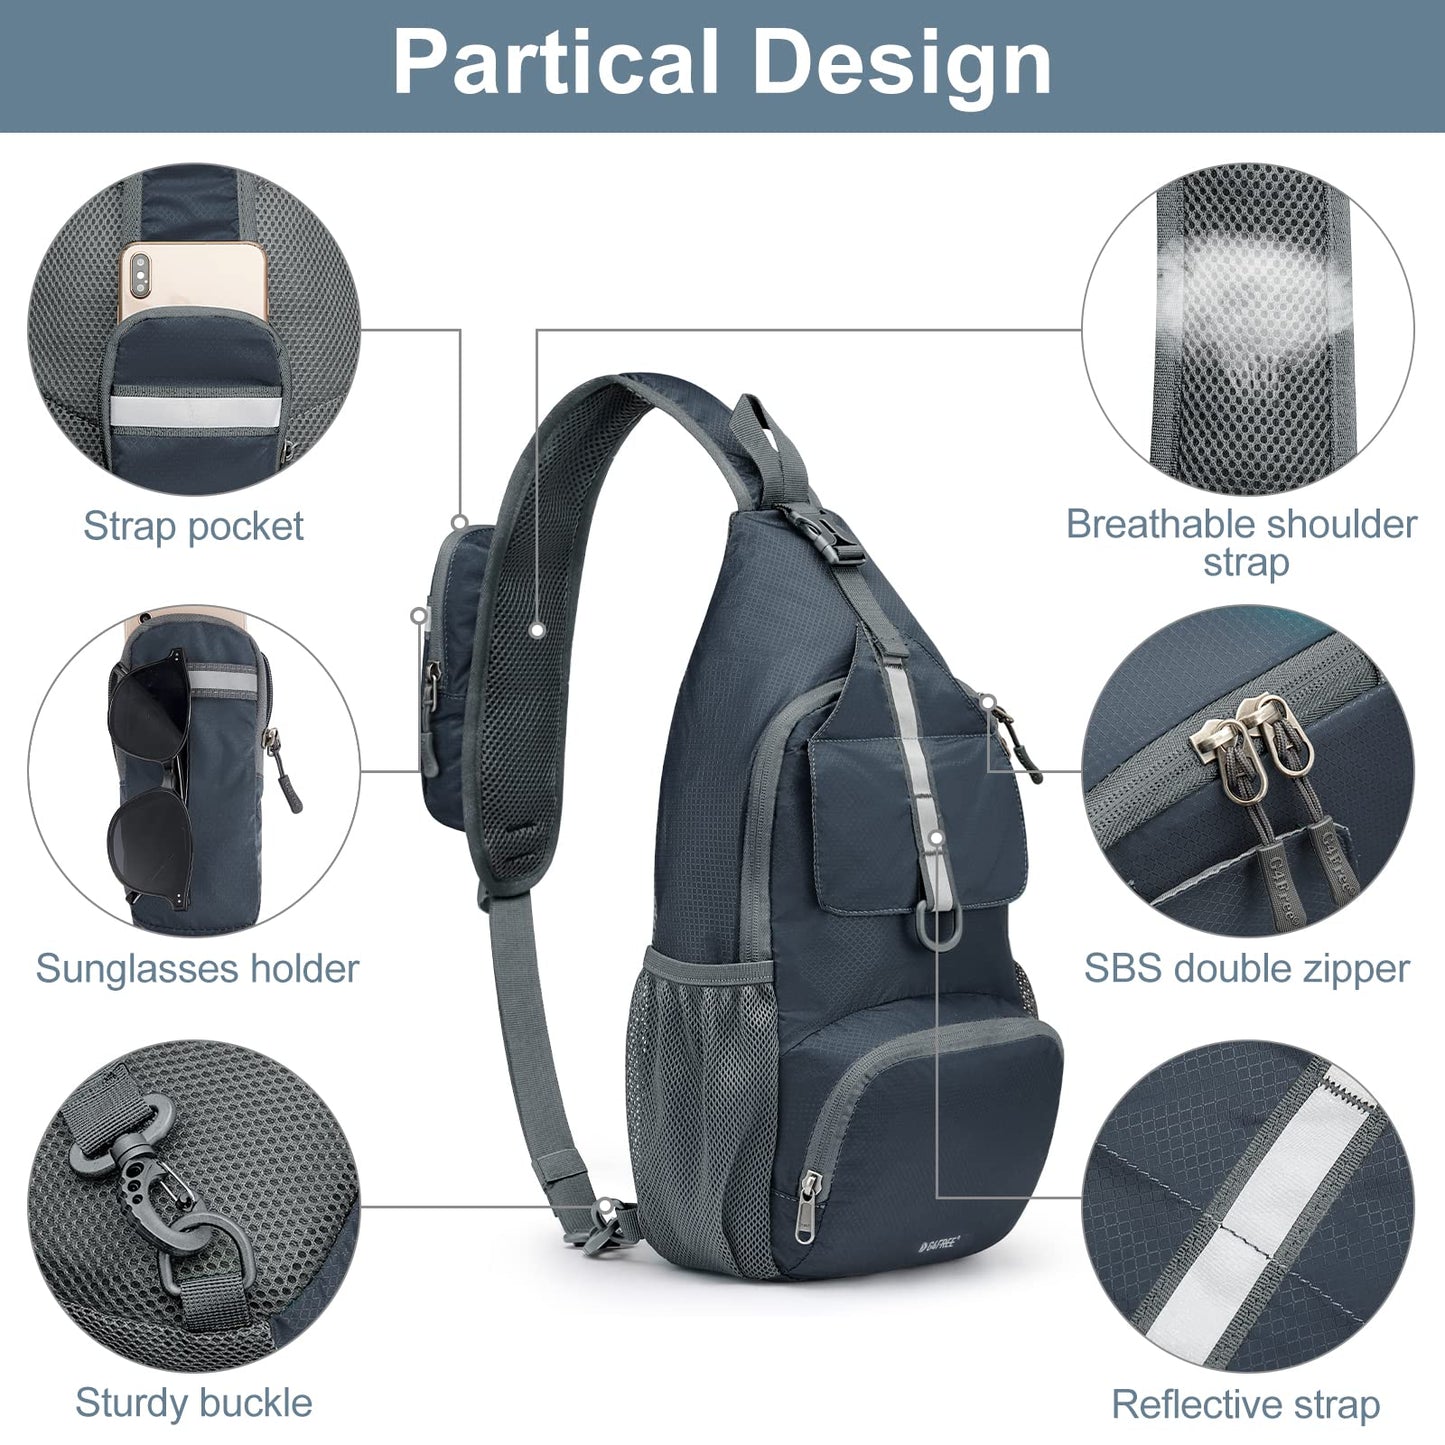 G4Free Packable Crossbody Sling Backpack